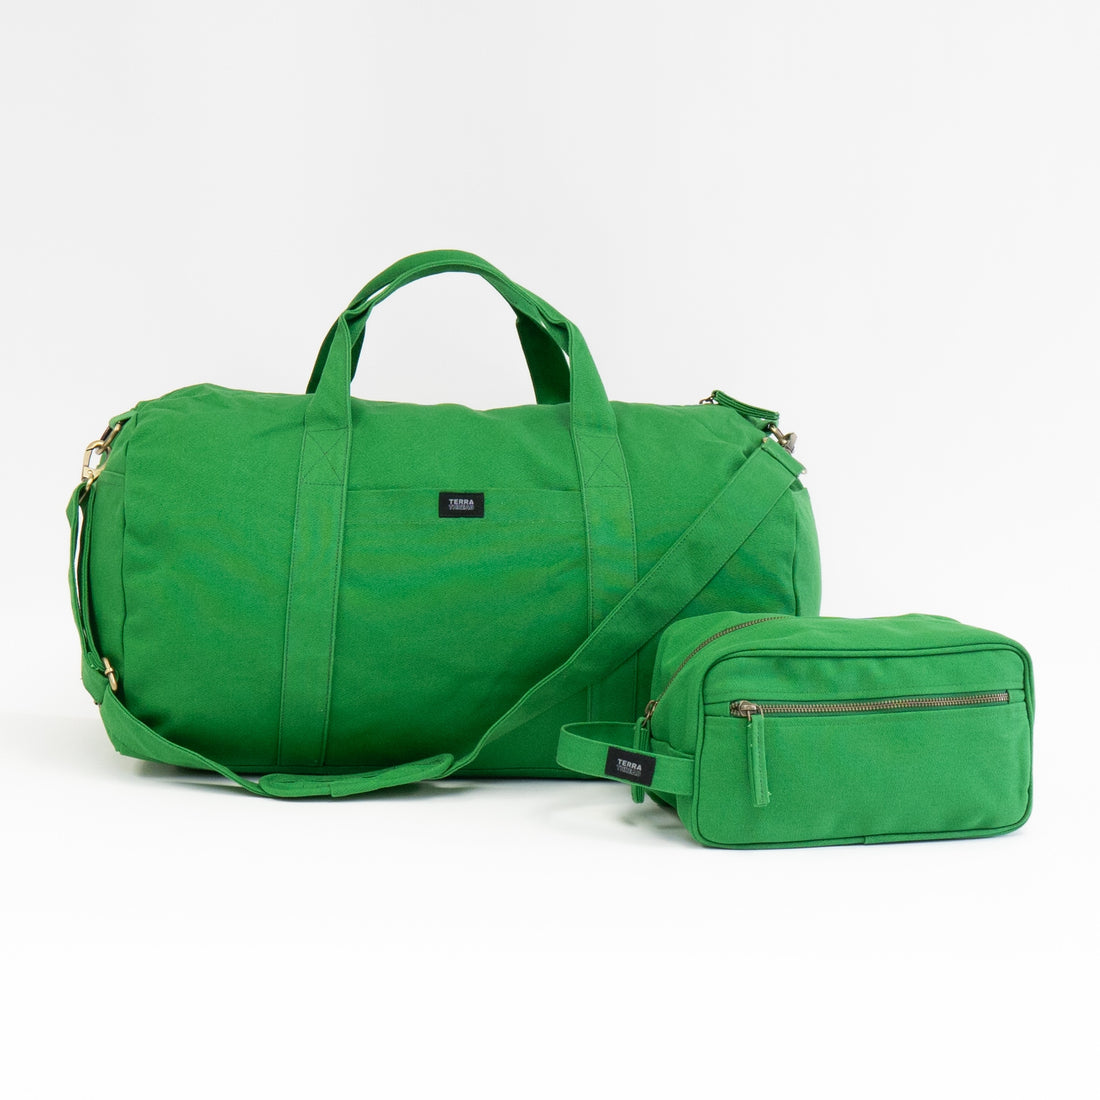 green duffle bag and toiletry bag